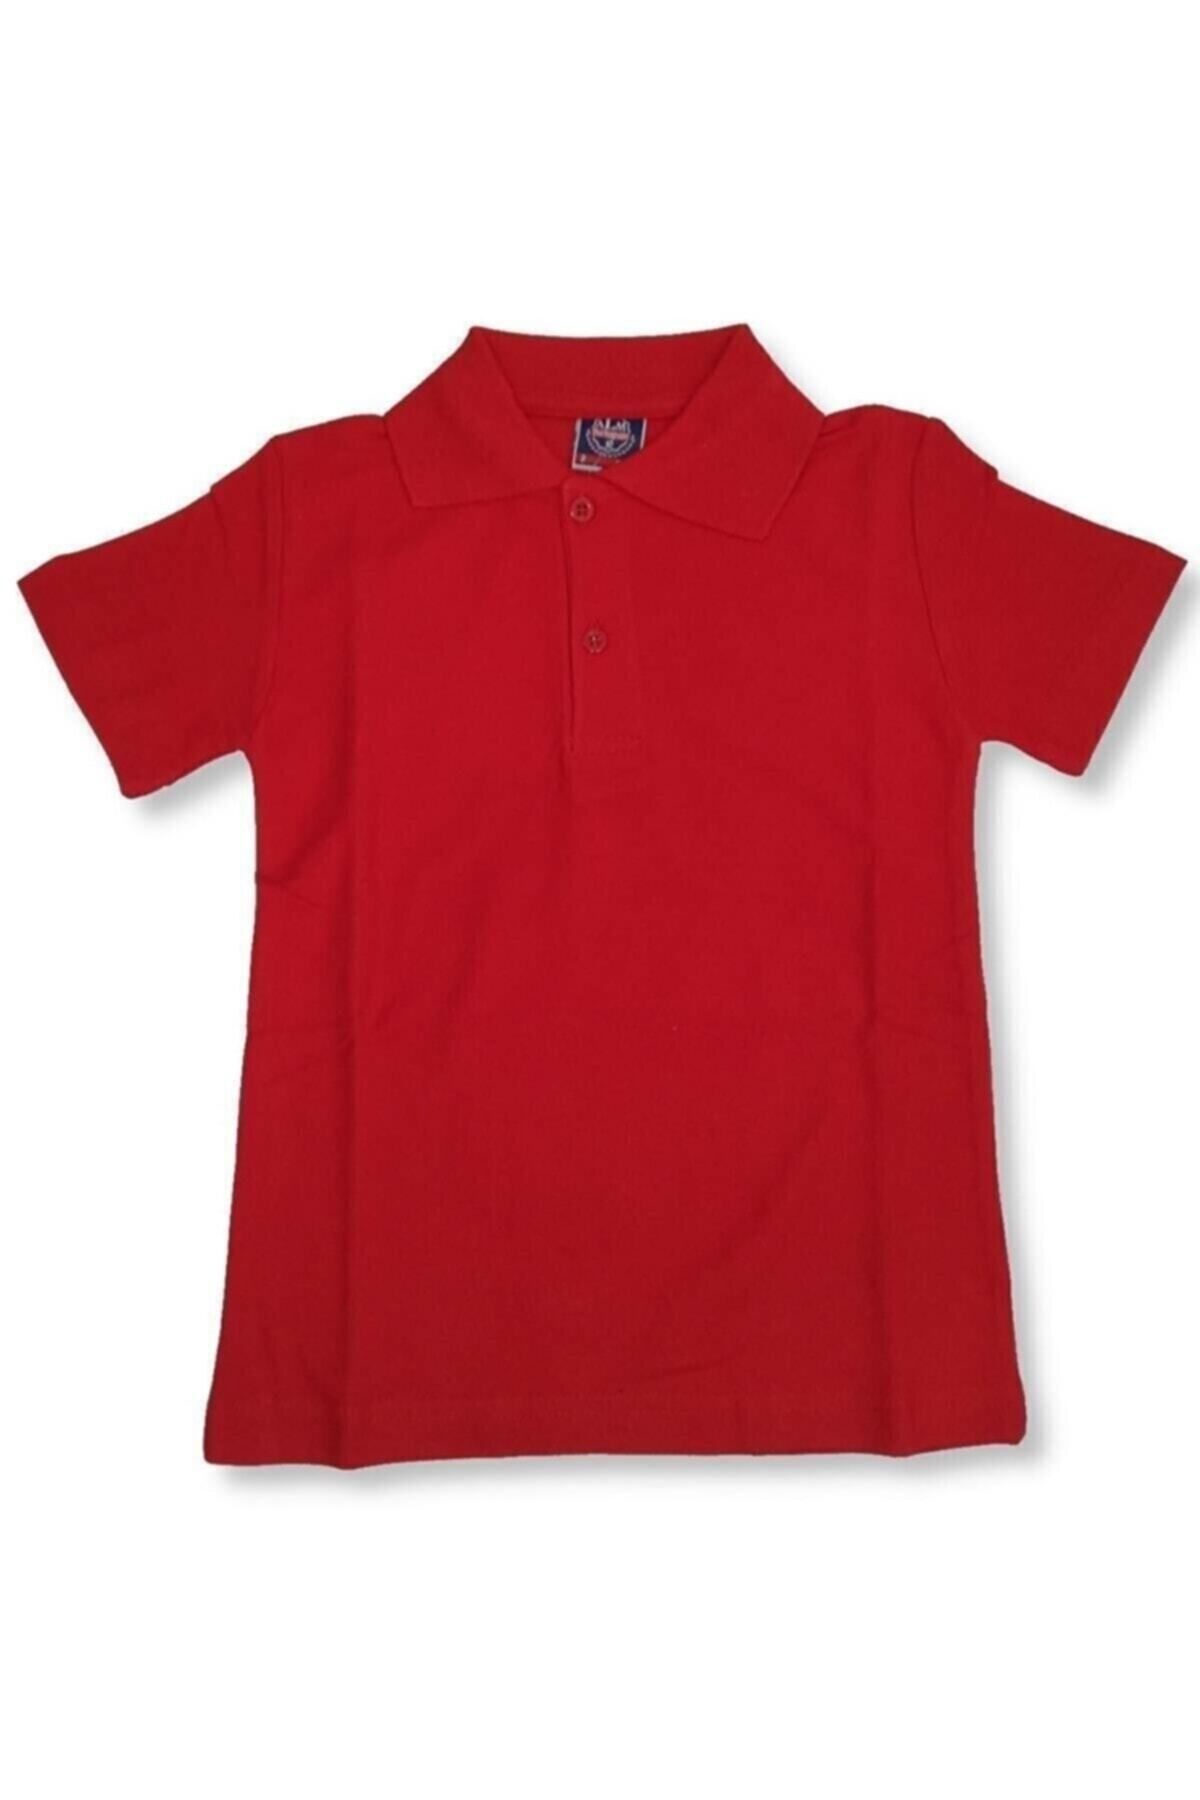 Nacar 23 Nisan Unisex Çocuk Polo Yaka Kısa Kol Okul T-shirt 0-24